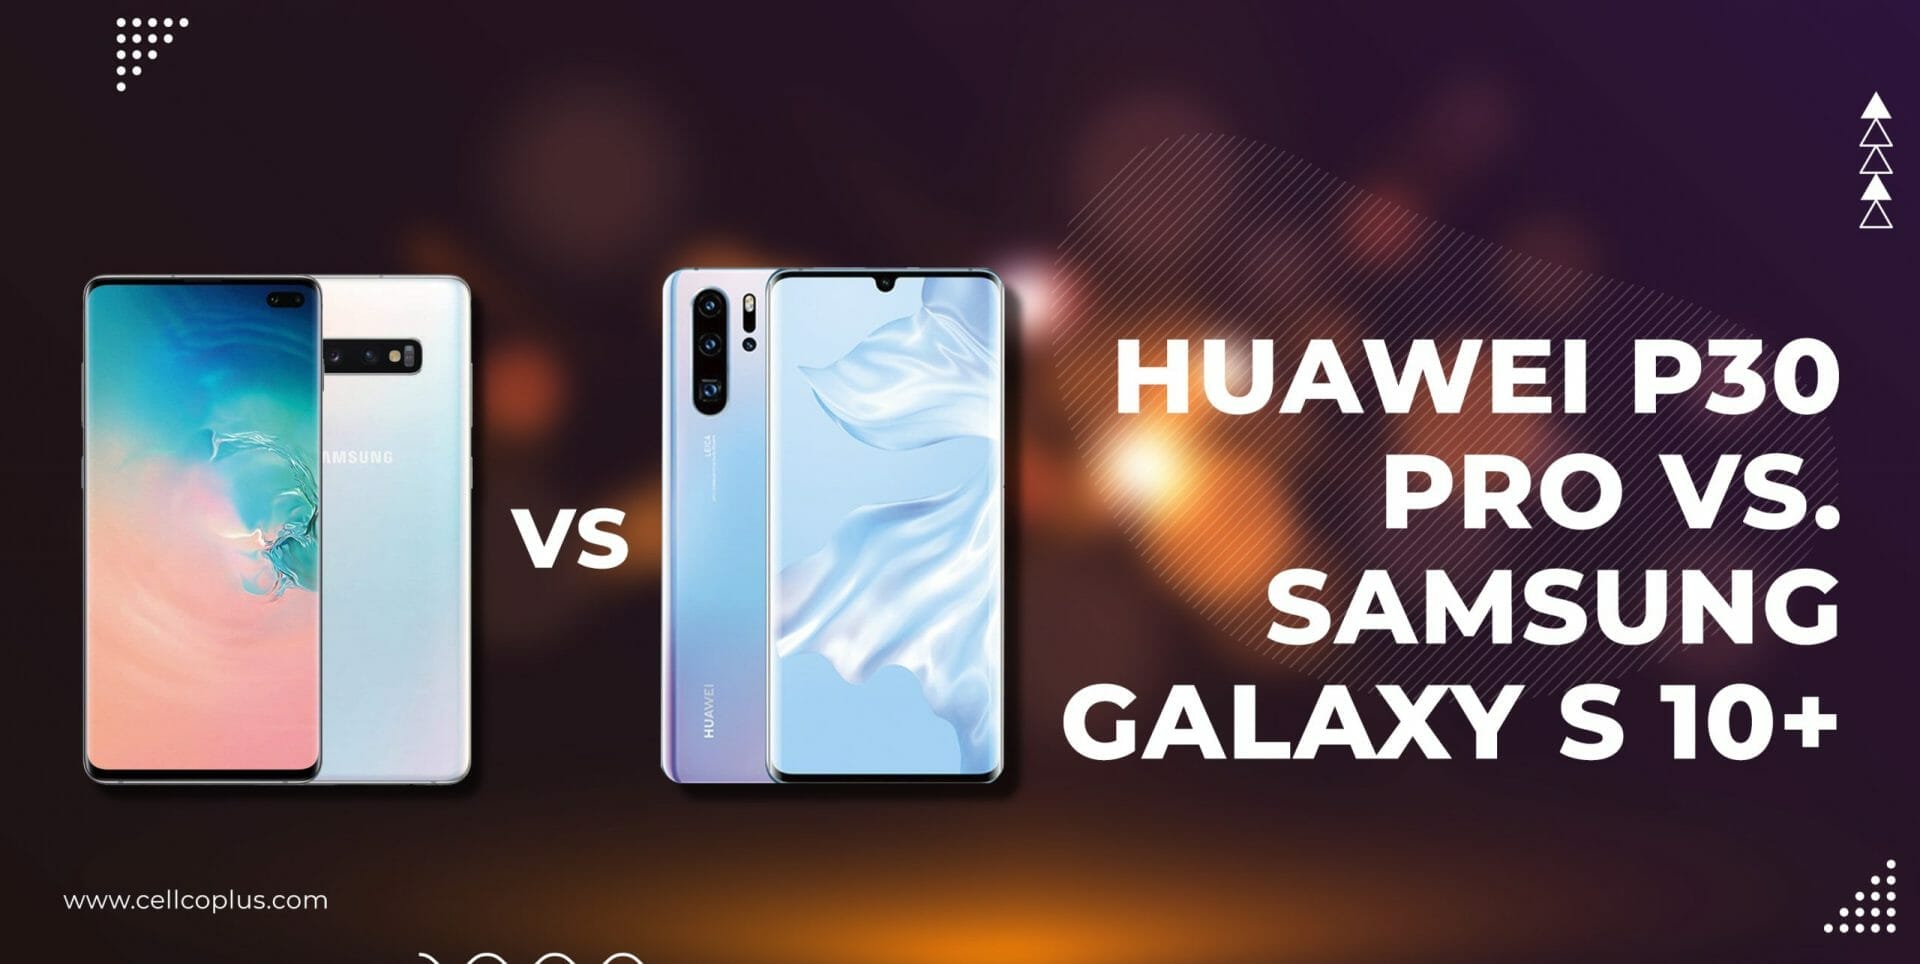 Huawei P30 Pro Versus Samsung Galaxy S 10+